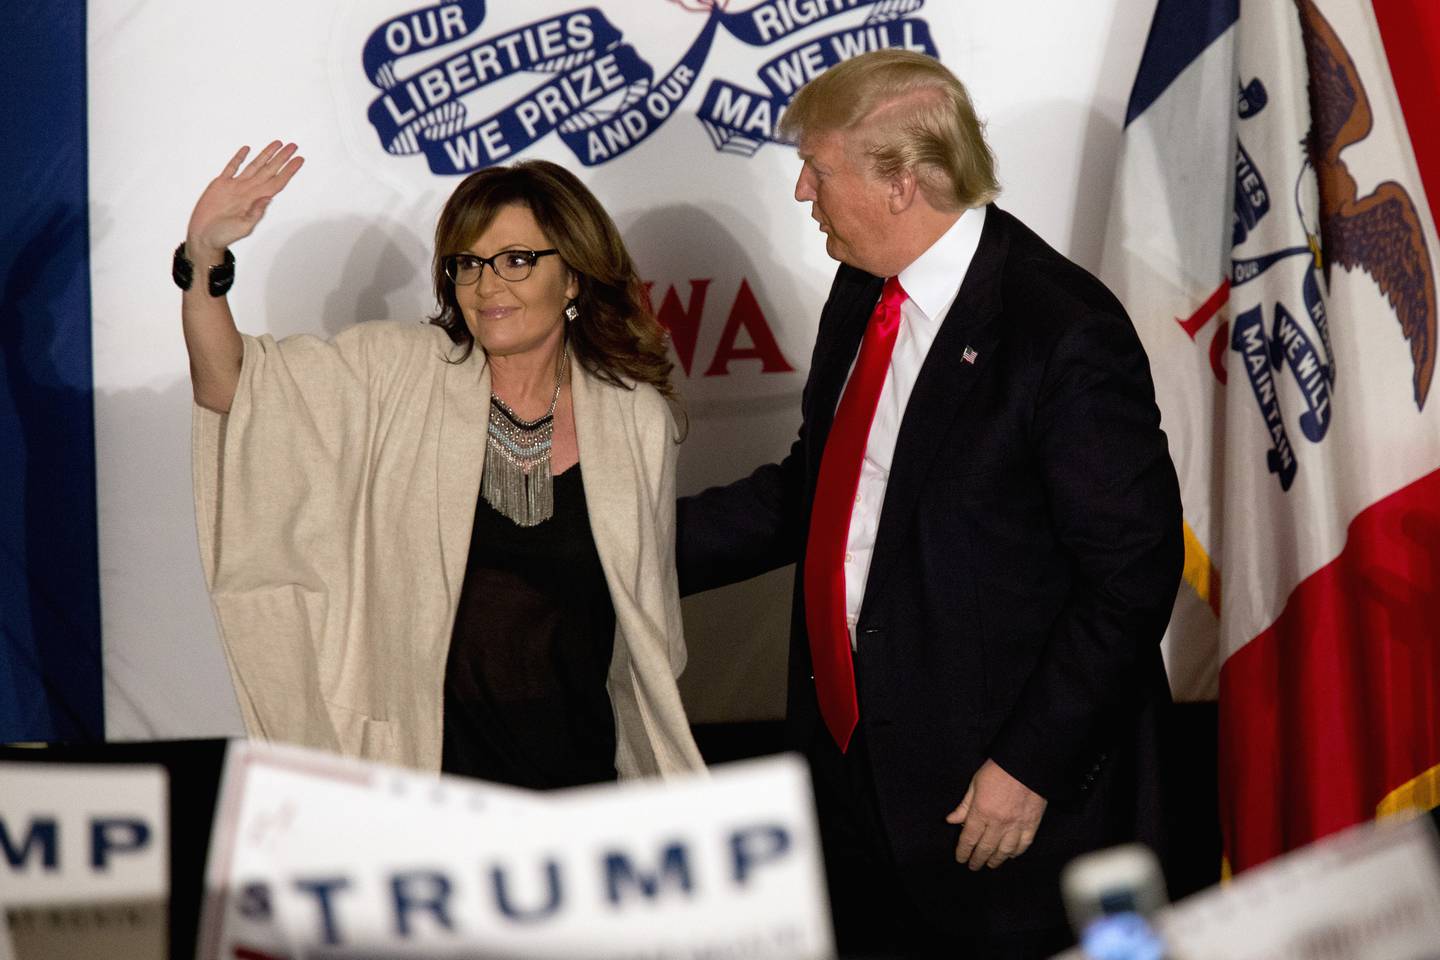 Trump rally supporting Palin, Tshibaka, Dunleavy scheduled in Anchorage next week